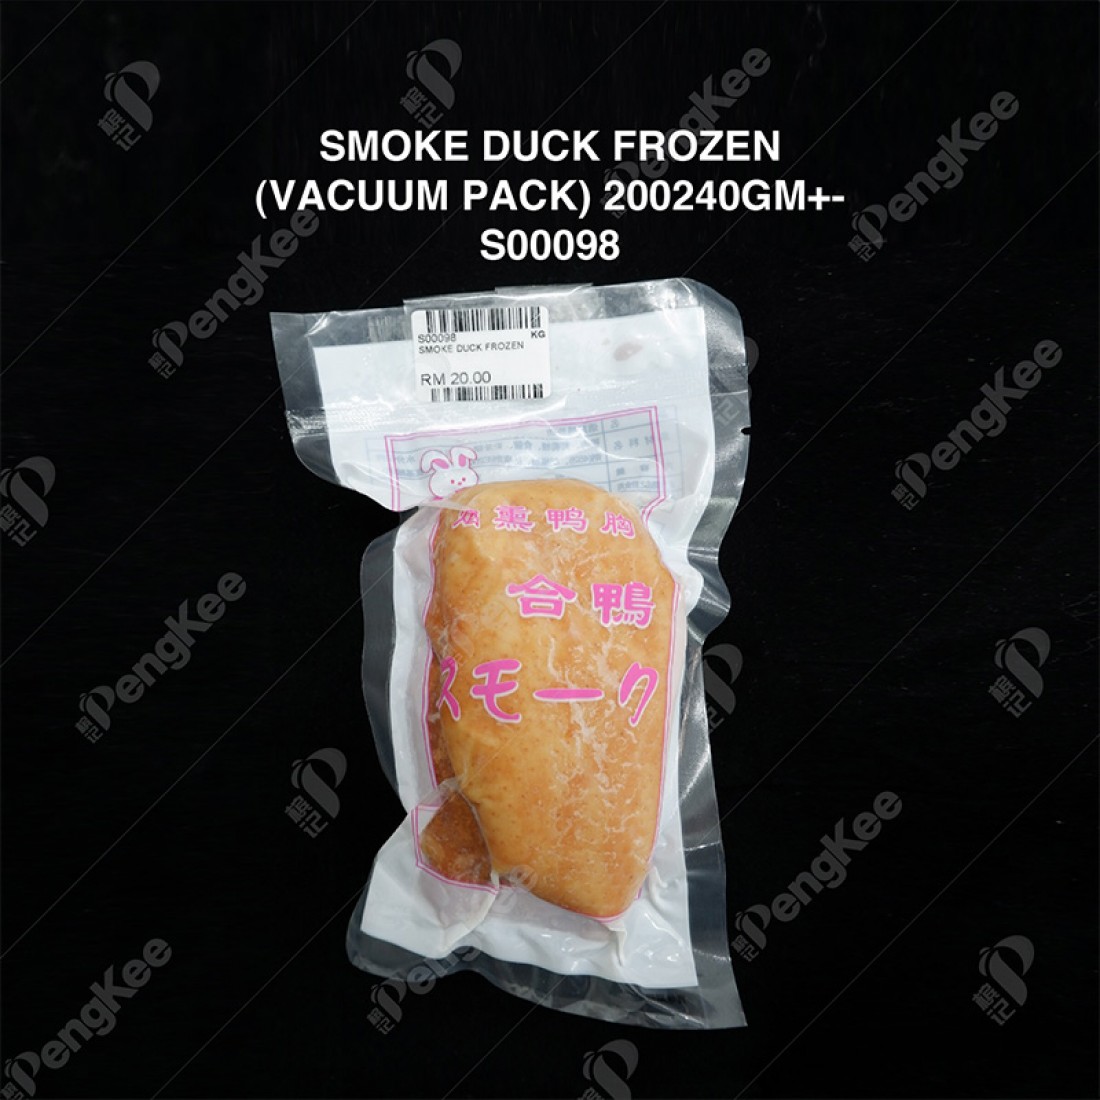 SMOKE DUCK FROZEN (VACUUM PACK) 200/240GM+- 